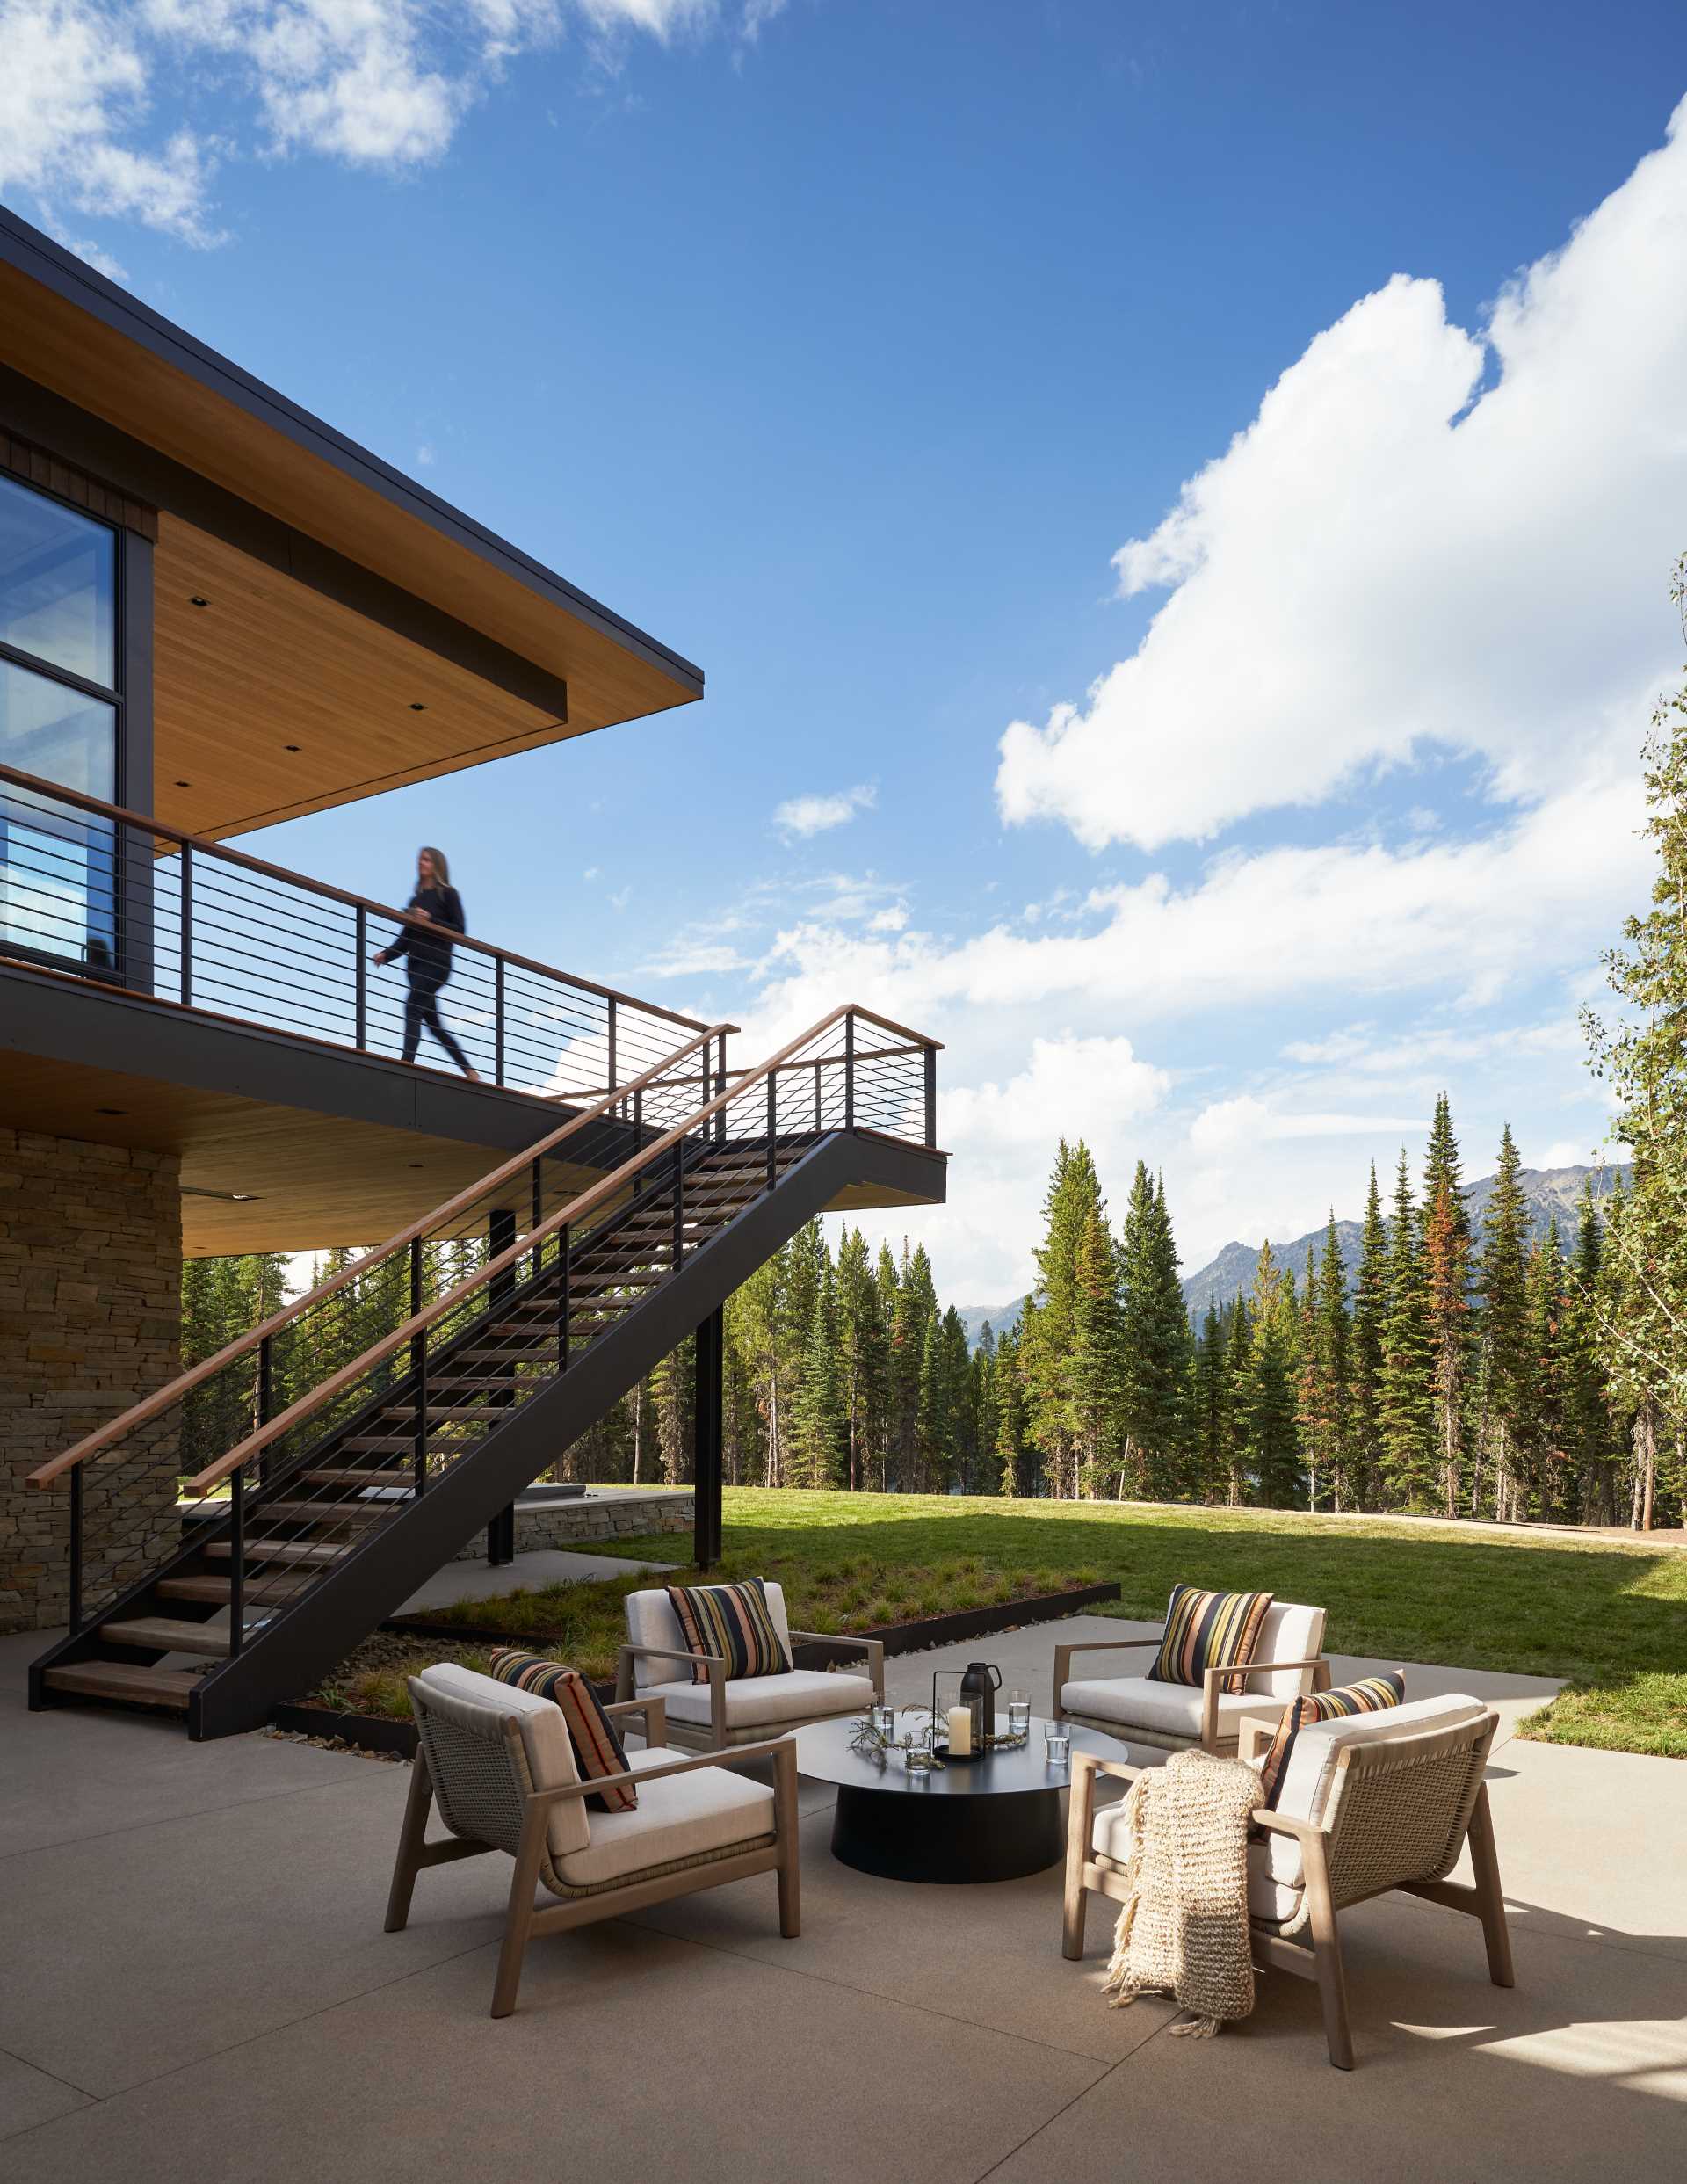 A modern mountain home with an outdoor patio.